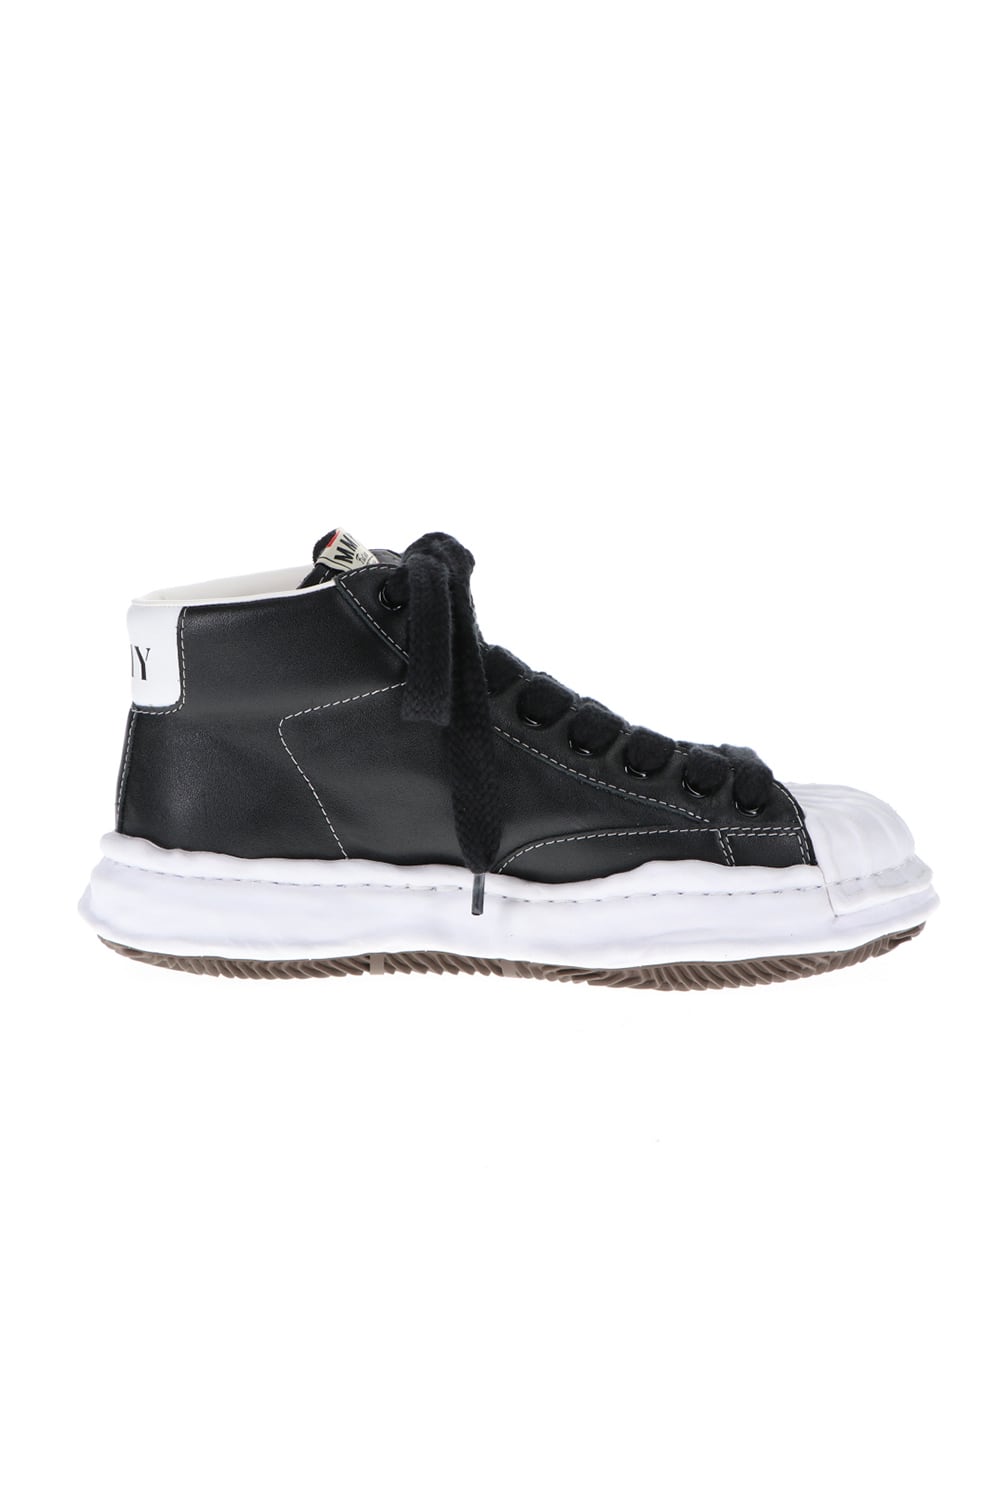 -BLAKEY High- Original STC sole leather Hi-top sneakers Black